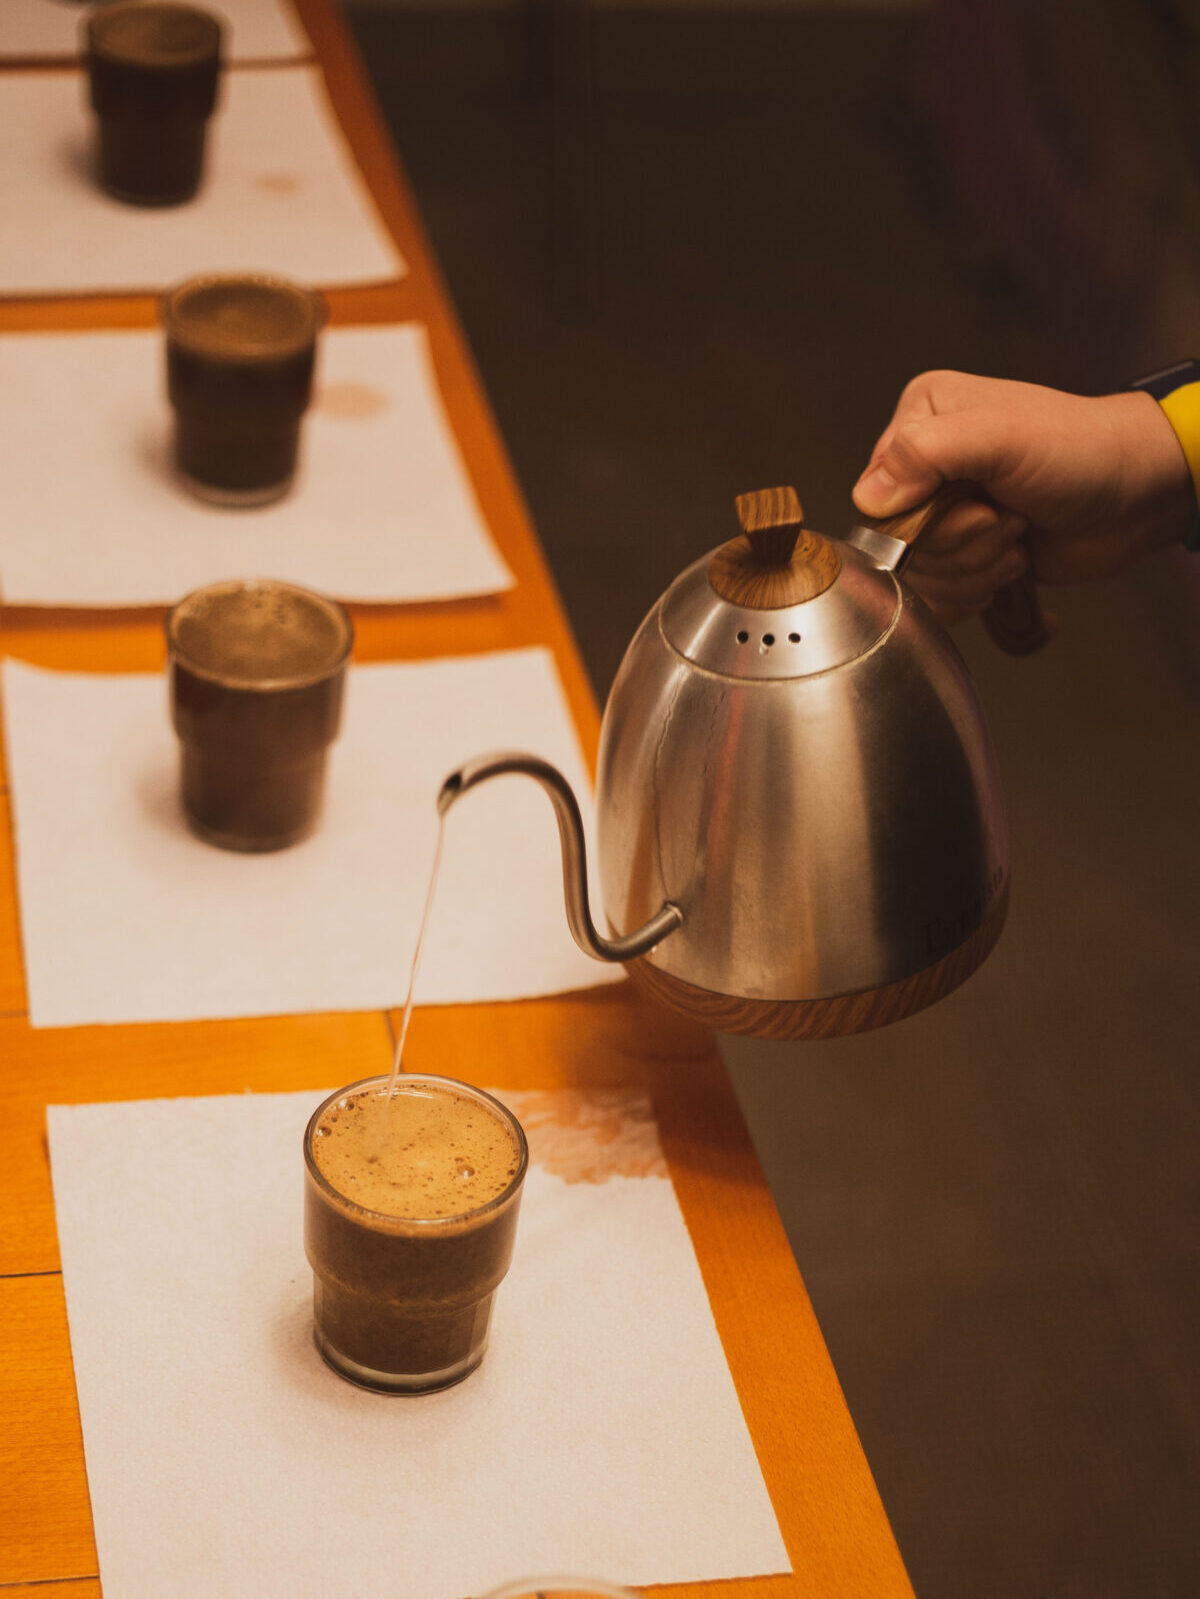 Ruka izlijeva vruću vodu iz kuhala s guščjim vratom preko taloga kave u prozirne staklene šalice.